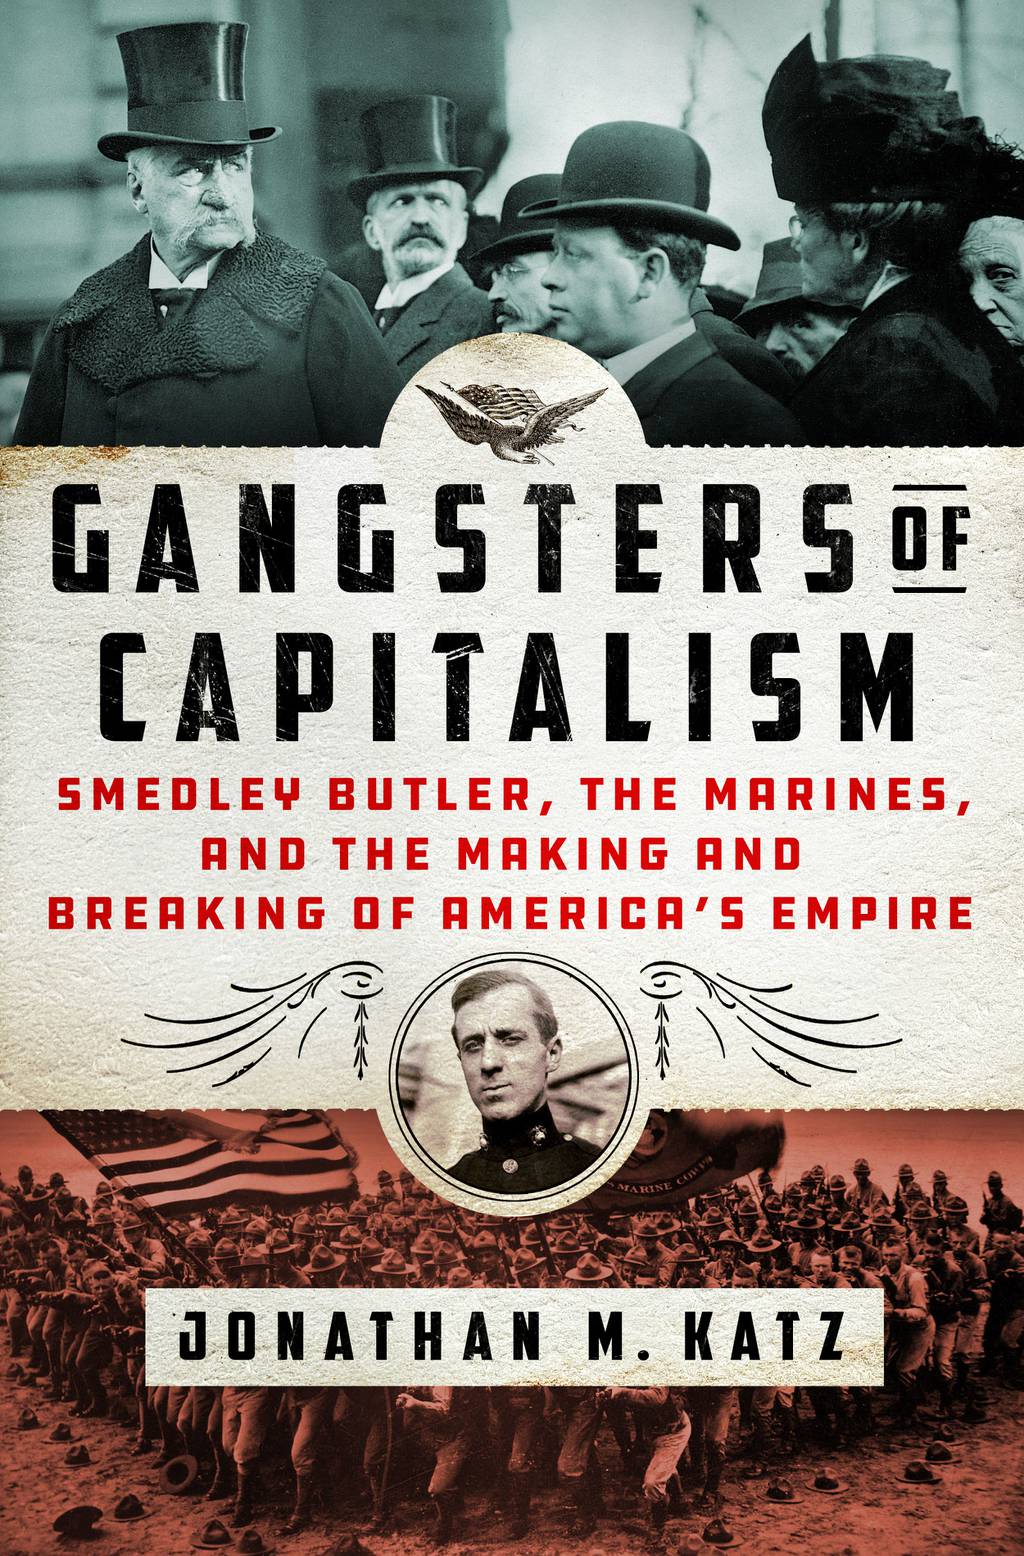 Smedley Butler, American empire & war profiteering subject of new book